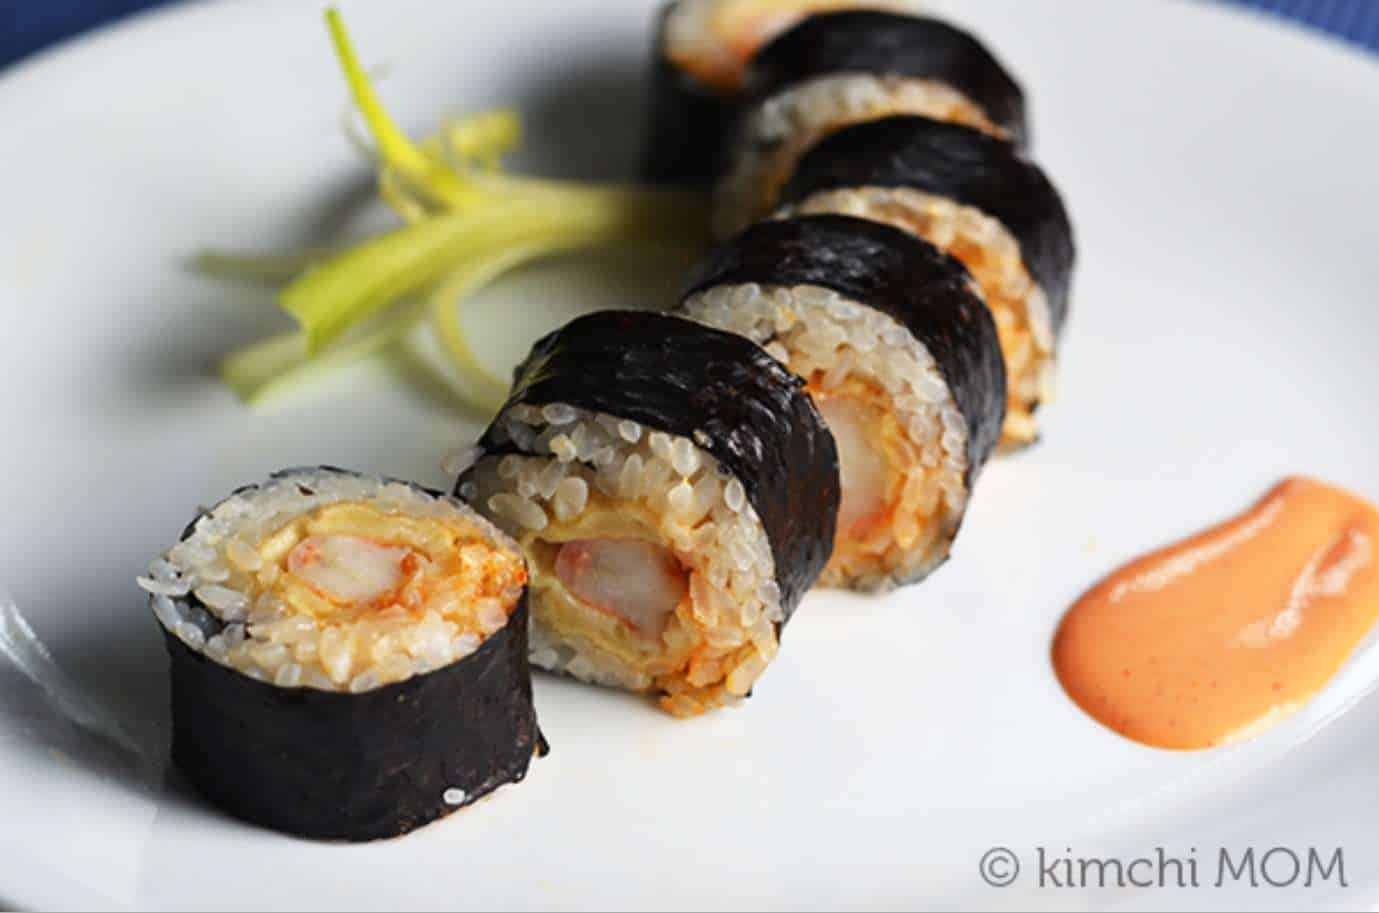 httpskimchimom.comspicy-shrimp-tempura-rolls-sundaysupper